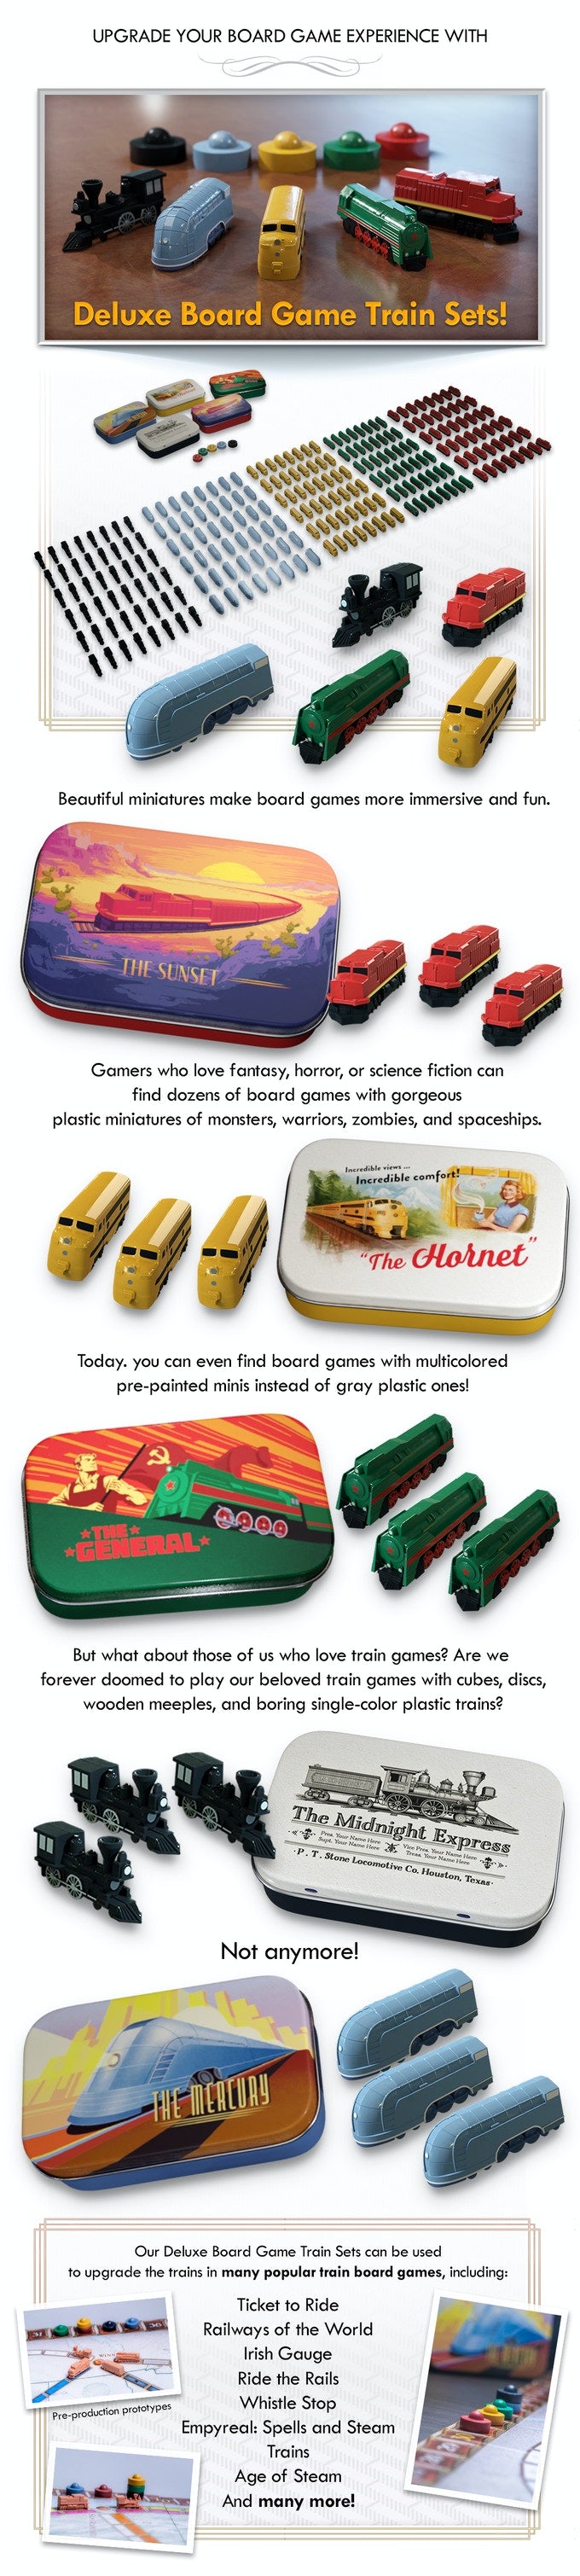 Little Plastic Train Company Deluxe Board Game Train Sets: The General